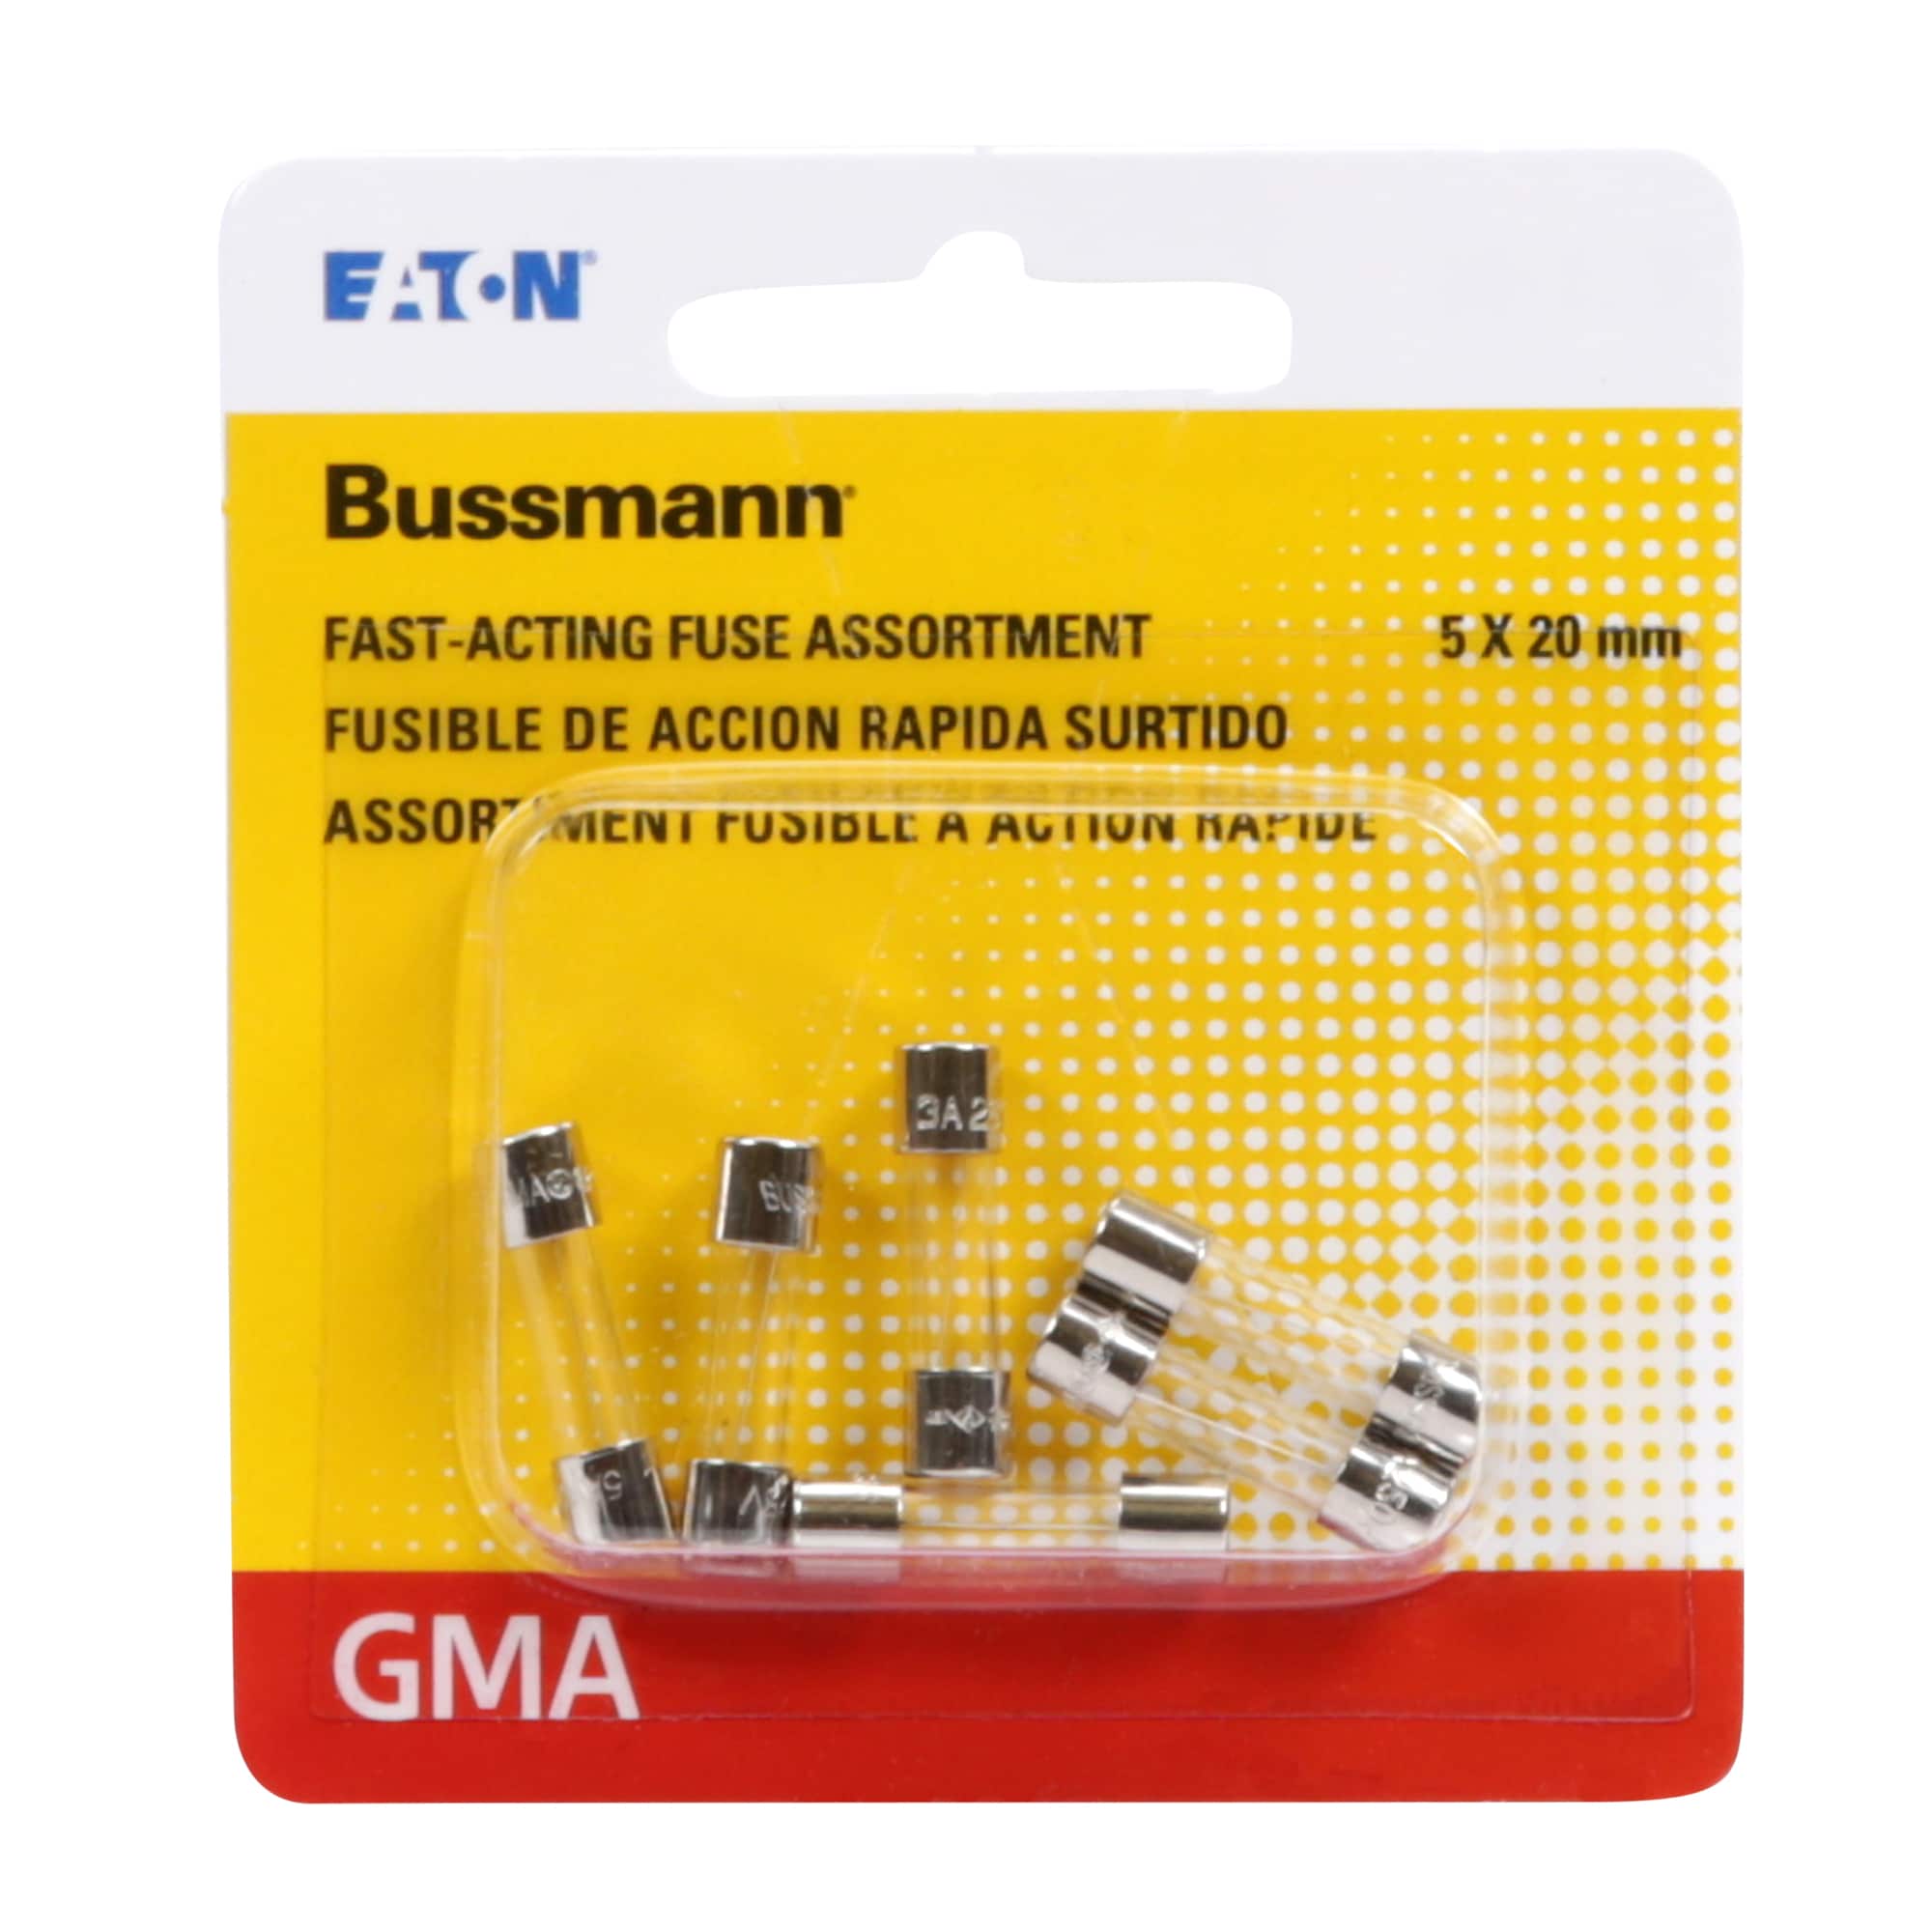 Bussmann Edison MEQ 6 Midget Fuses Time-delay Fuse 6amp 500vac for sale online